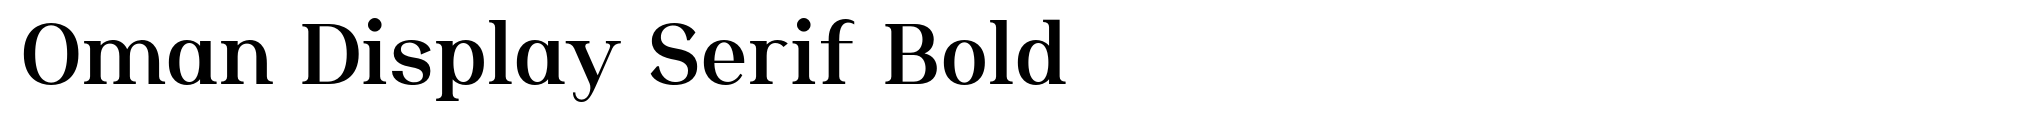 Oman Display Serif Bold image